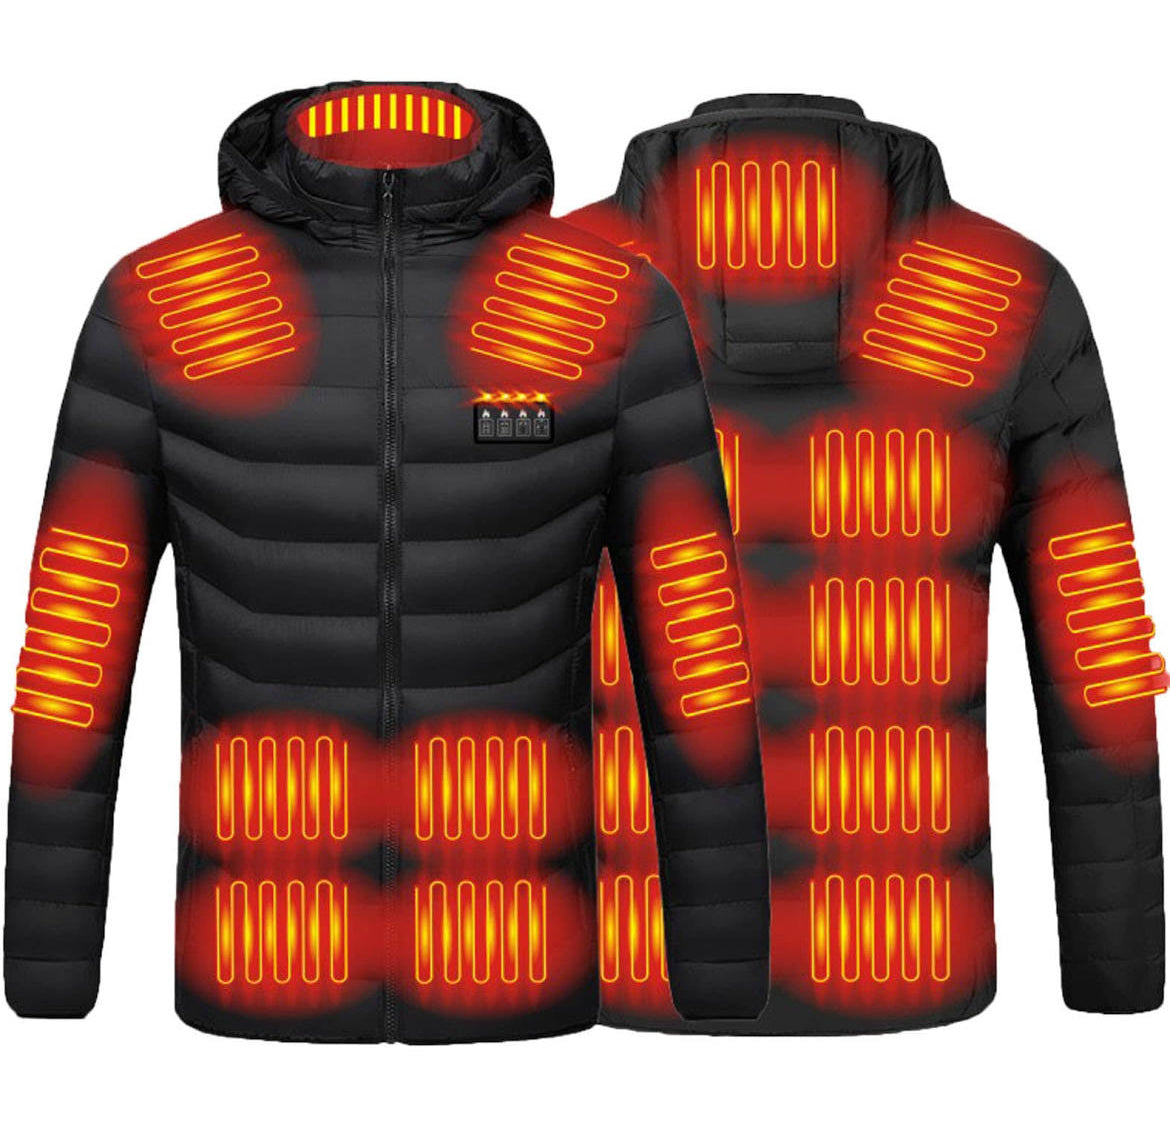 21 Areas Heated Jacket Men Winter Women Motorcycle Jacket Warm Vest Heating Jacket Heated Vest Coat Ski Hiking